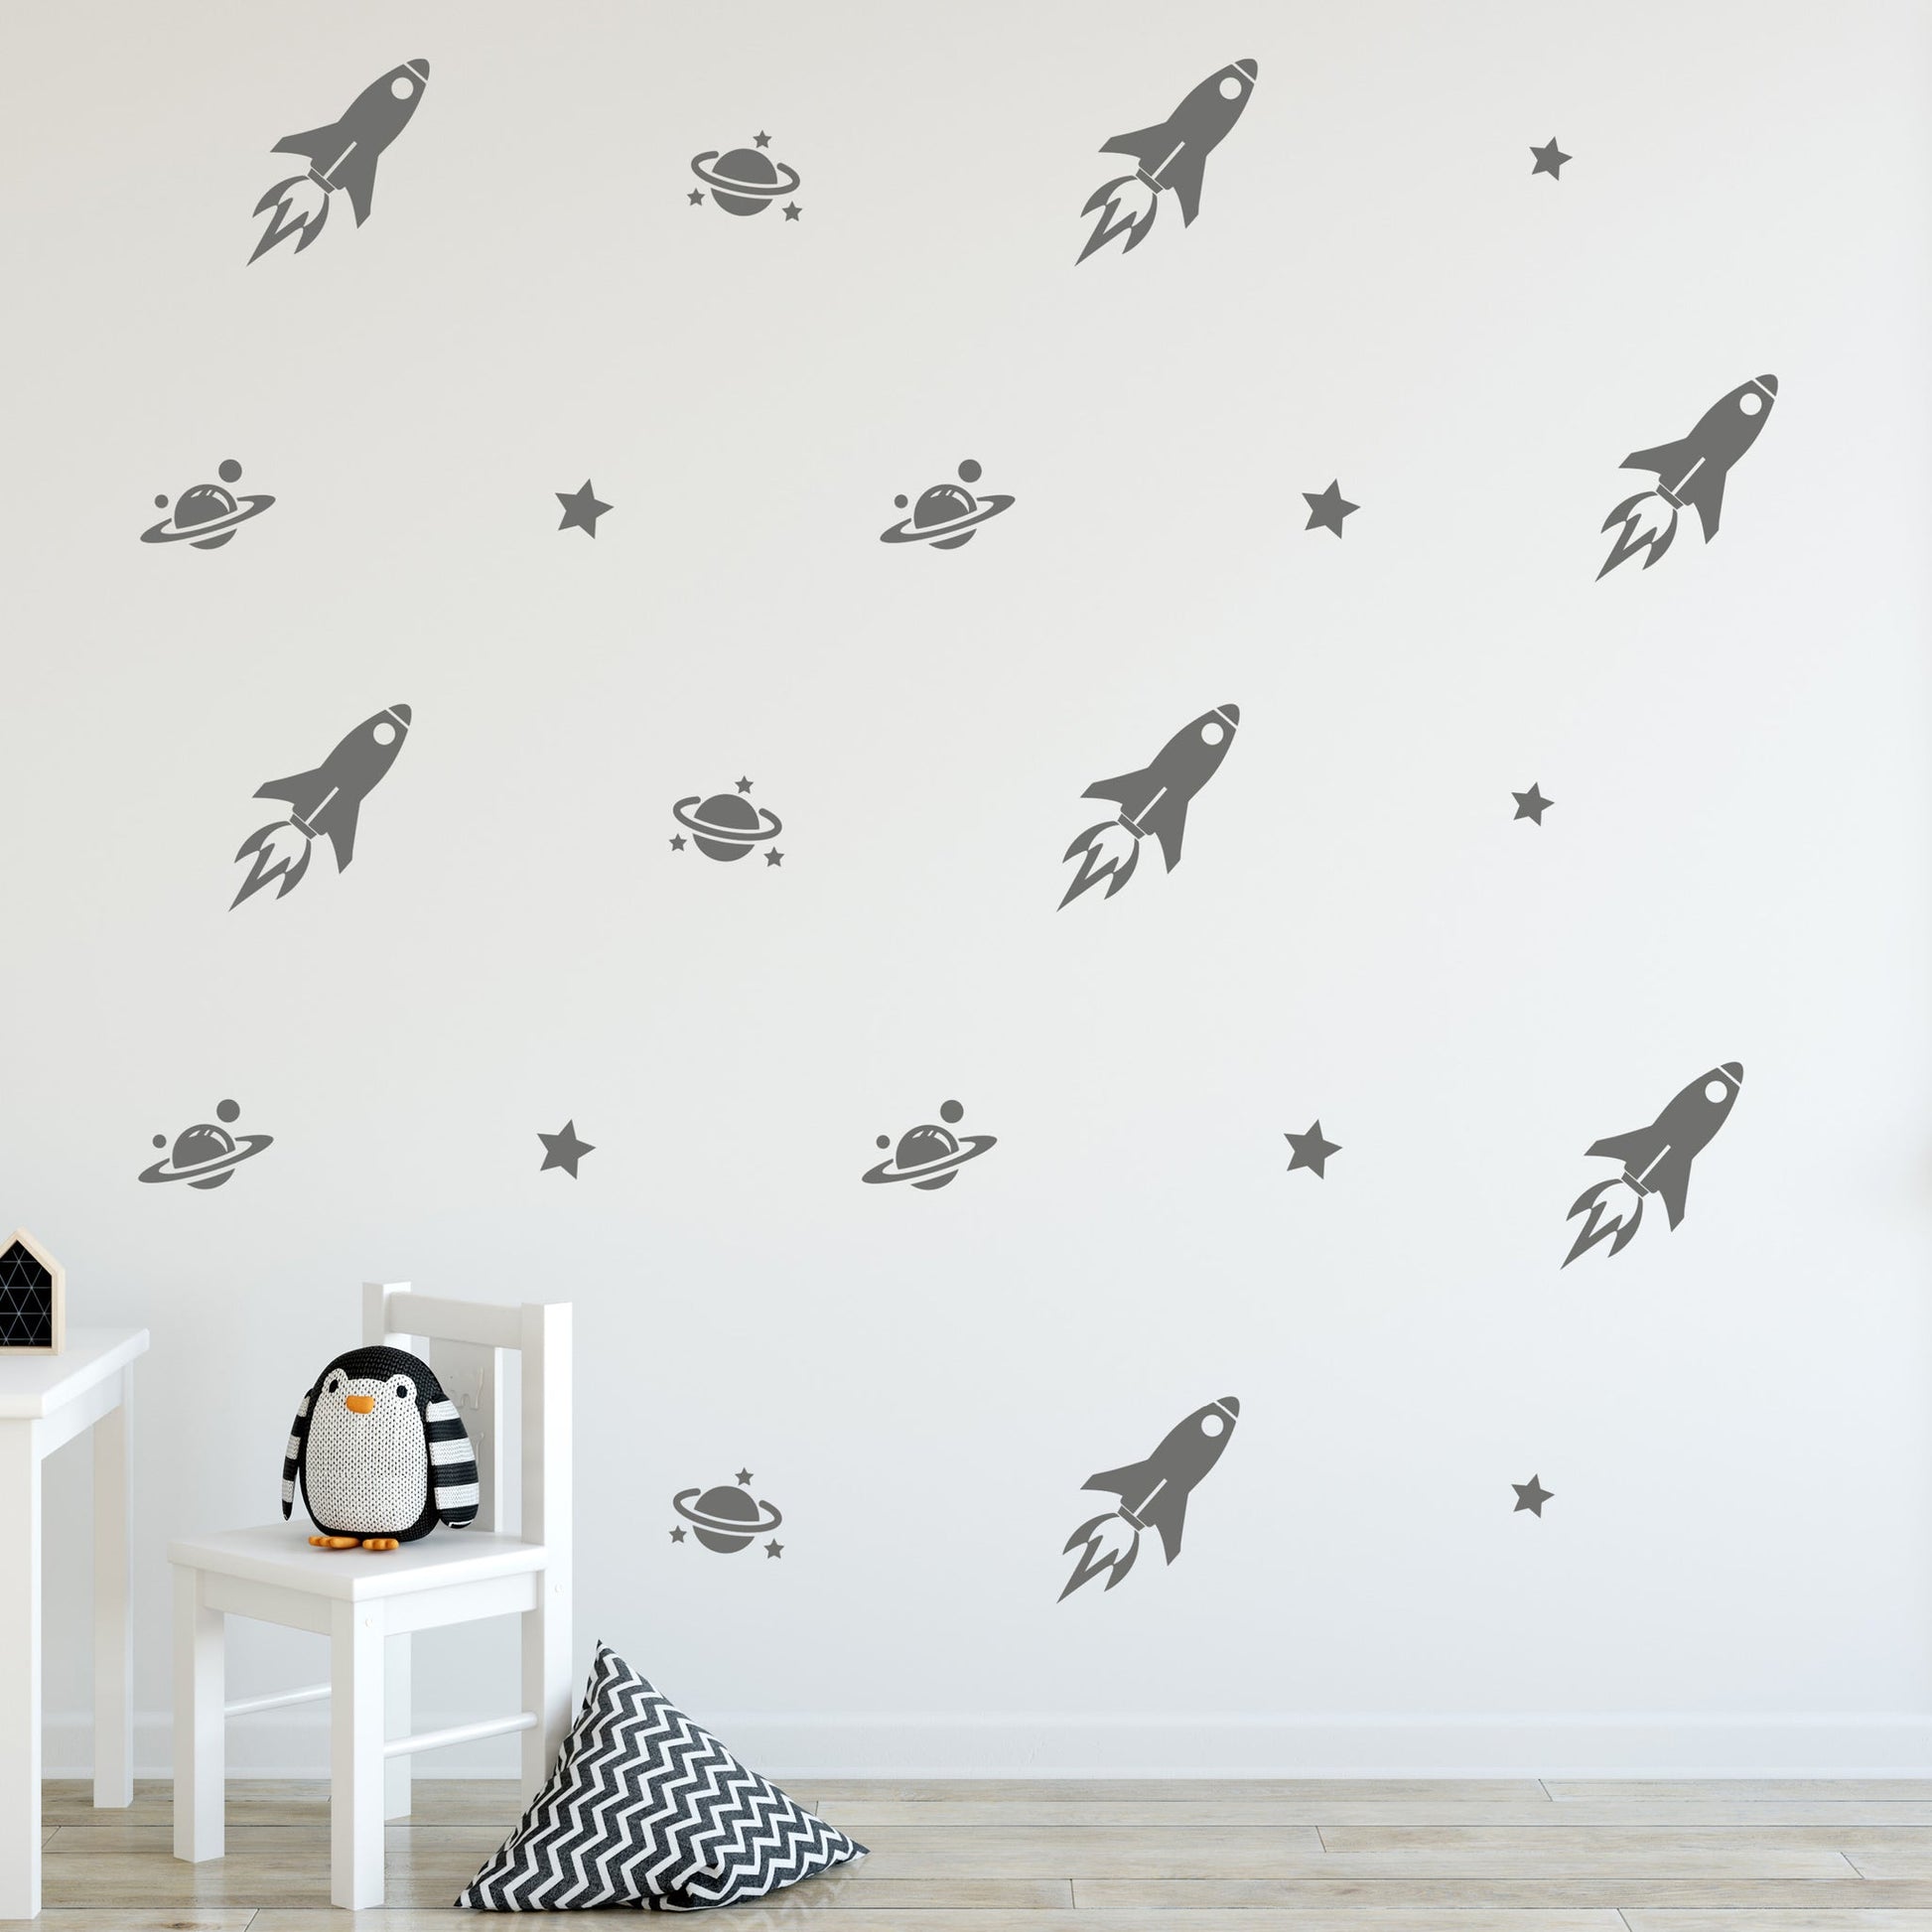 Spaceship Galaxy pattern Wall Decal stickers grey